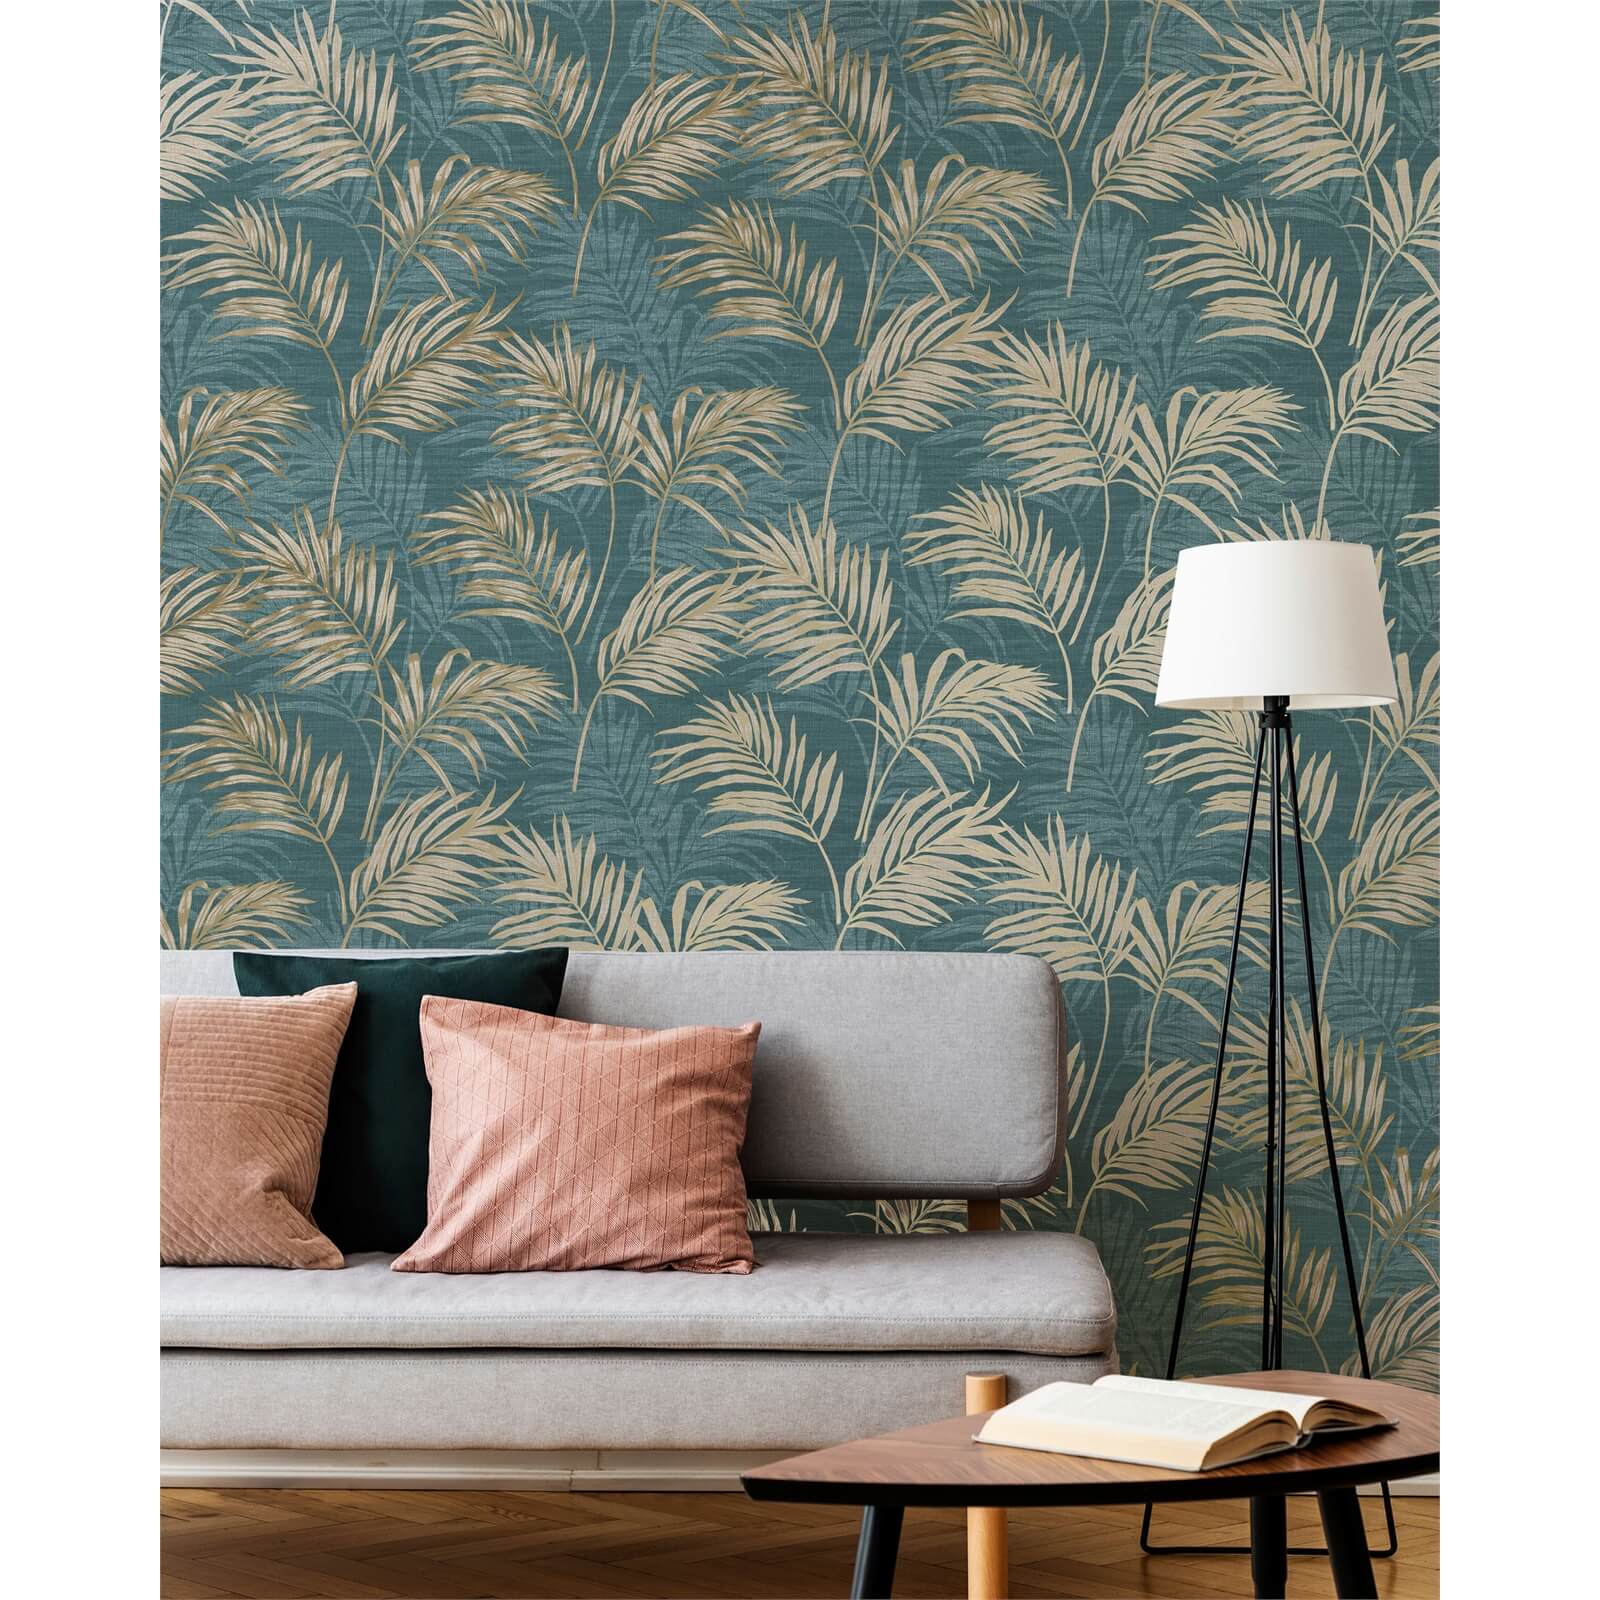 Grandeco Lounge Palm Teal Wallpaper